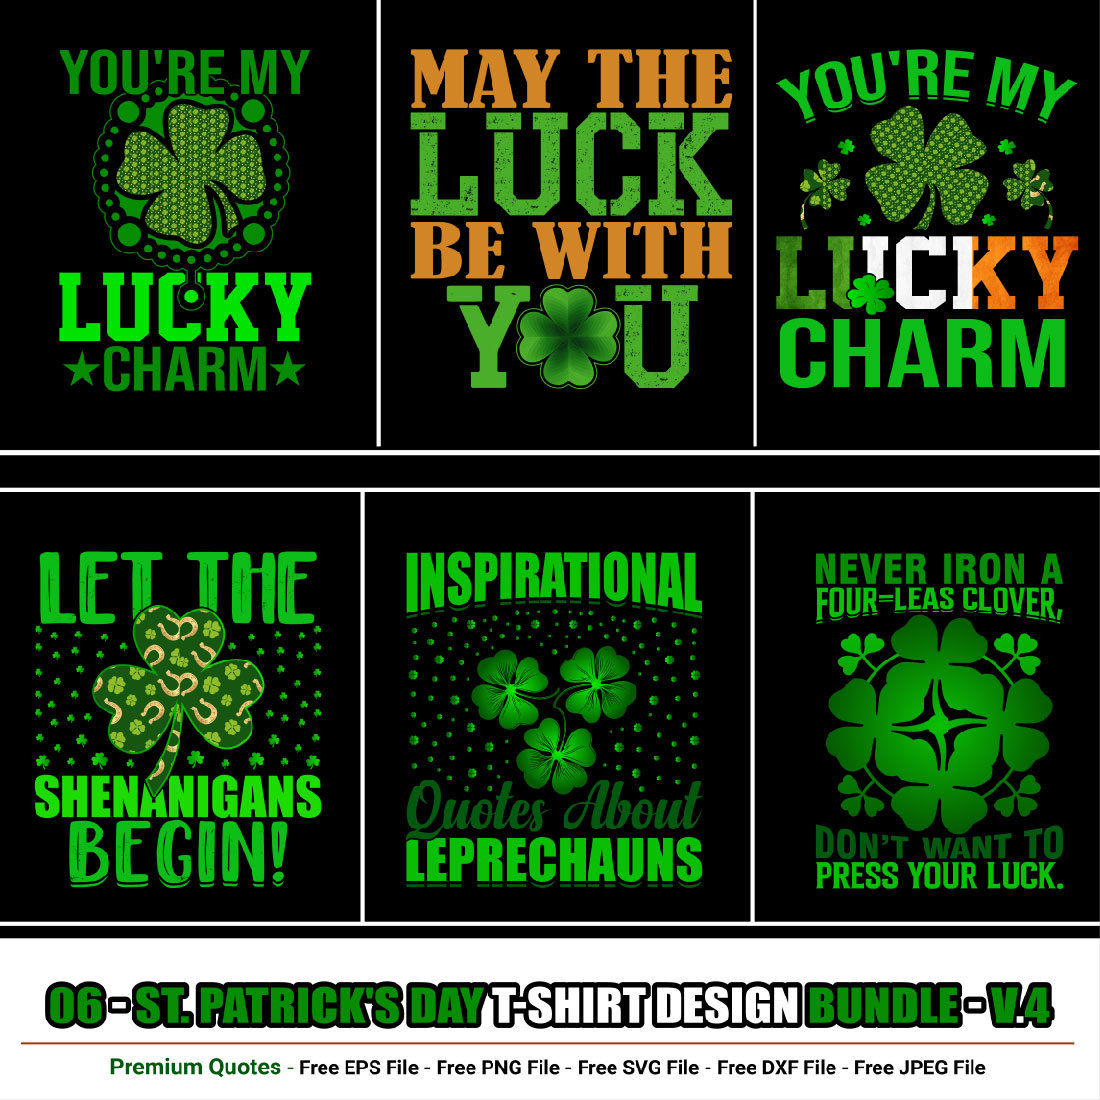 St Patrick’s Day T-shirt Design Bundle cover image.